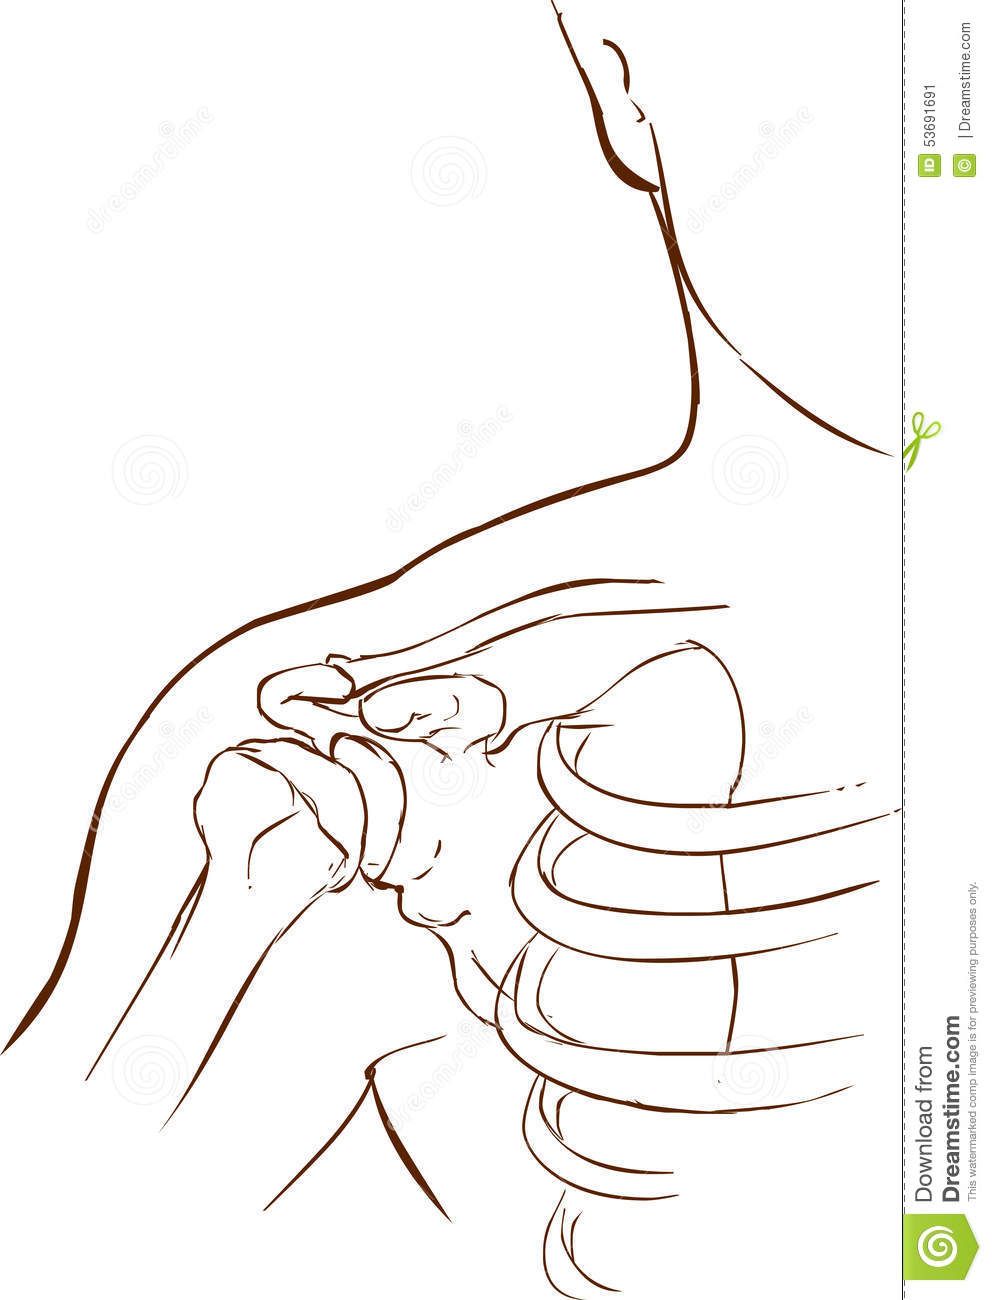 Stock Illustration  Shoulder Dislocation